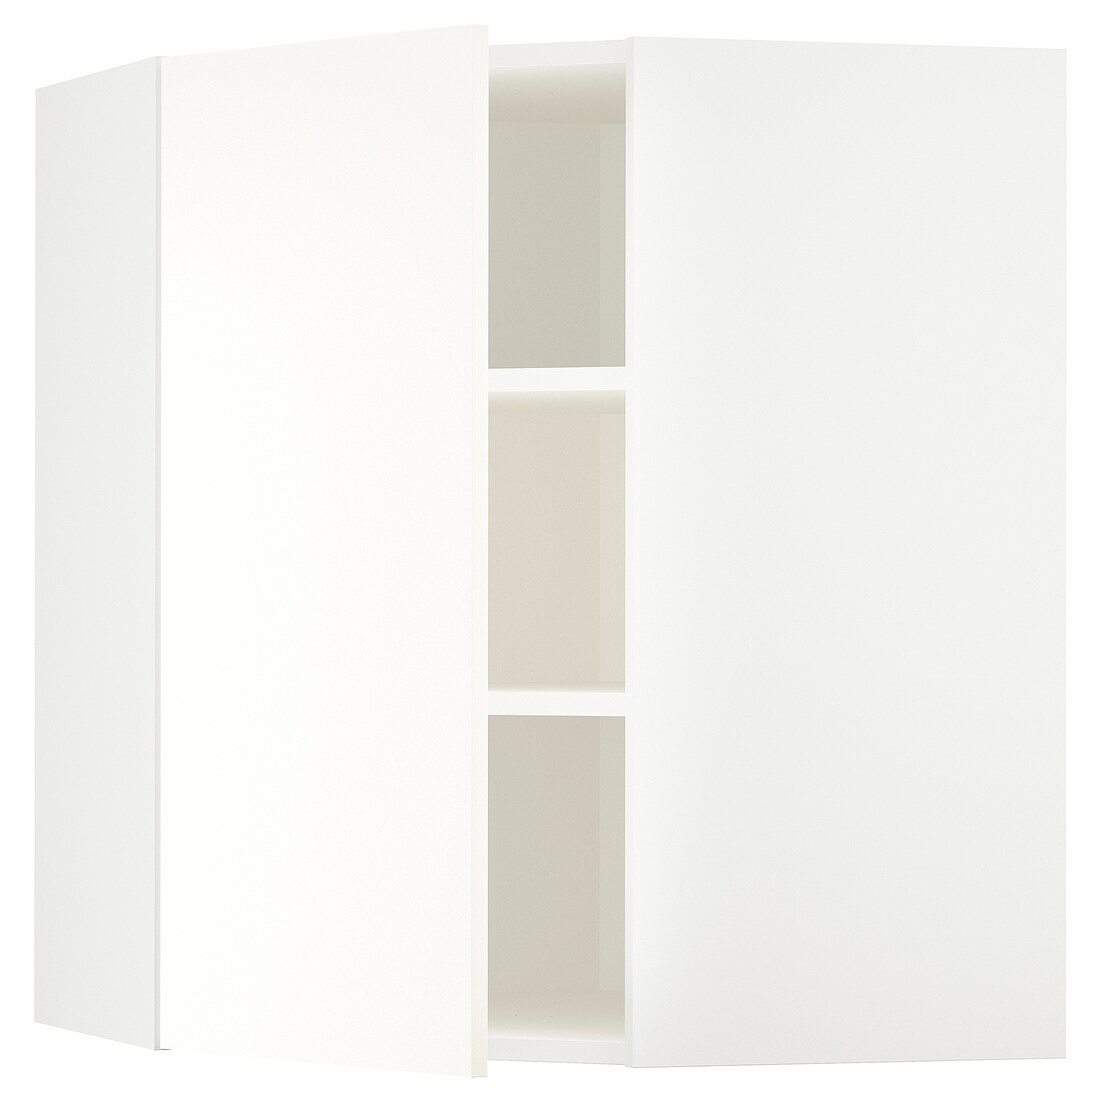 IKEA METOD МЕТОД Угловой навесной шкаф с полками, белый / Vallstena белый 29507287 295.072.87